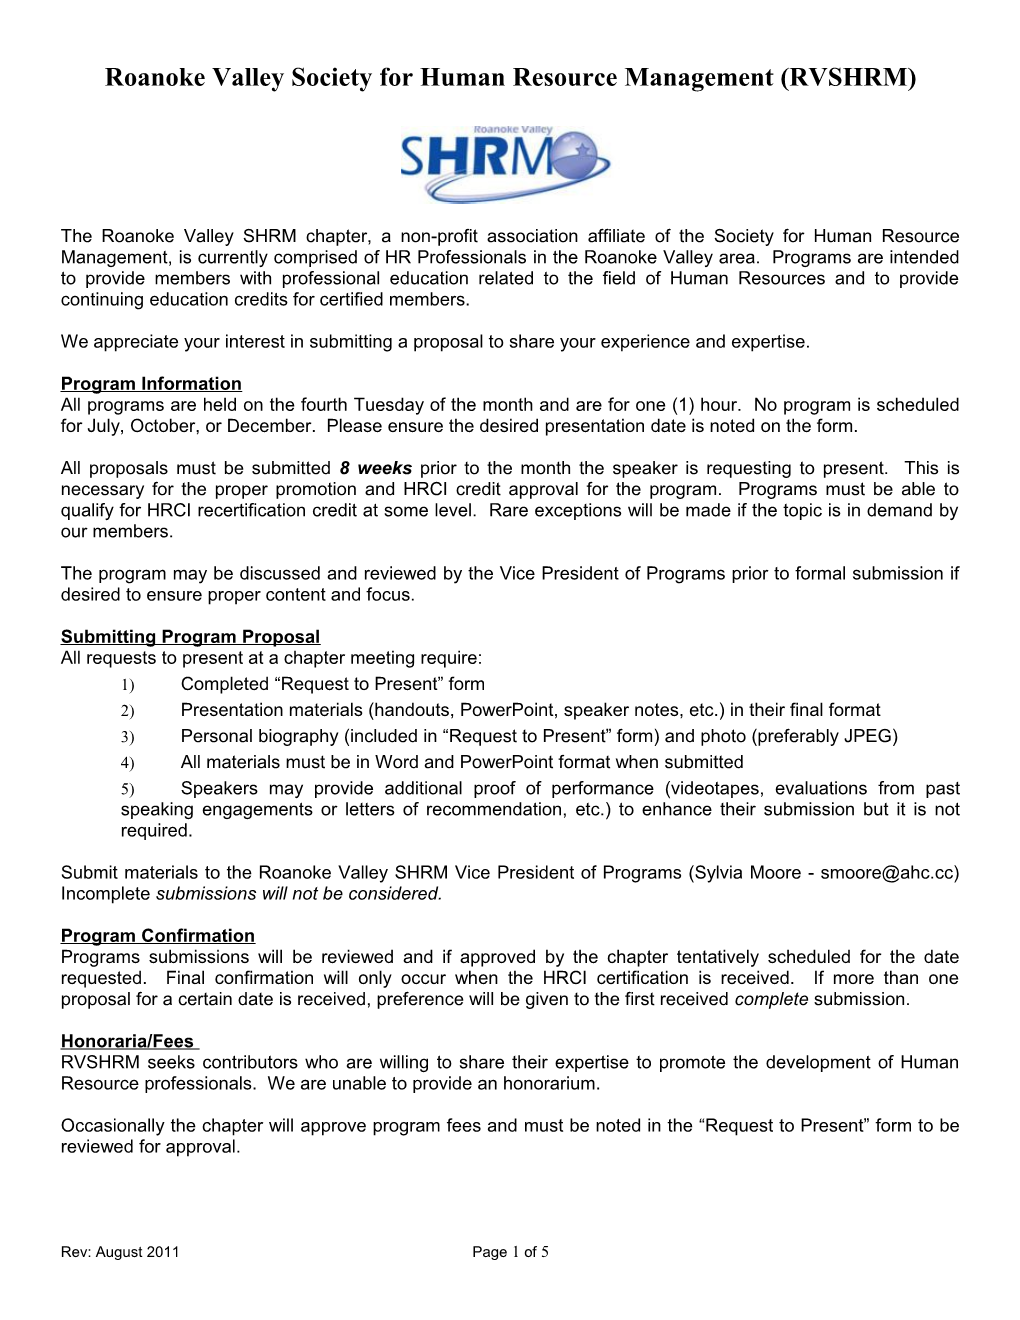 SHRM 2001 Proposal Form